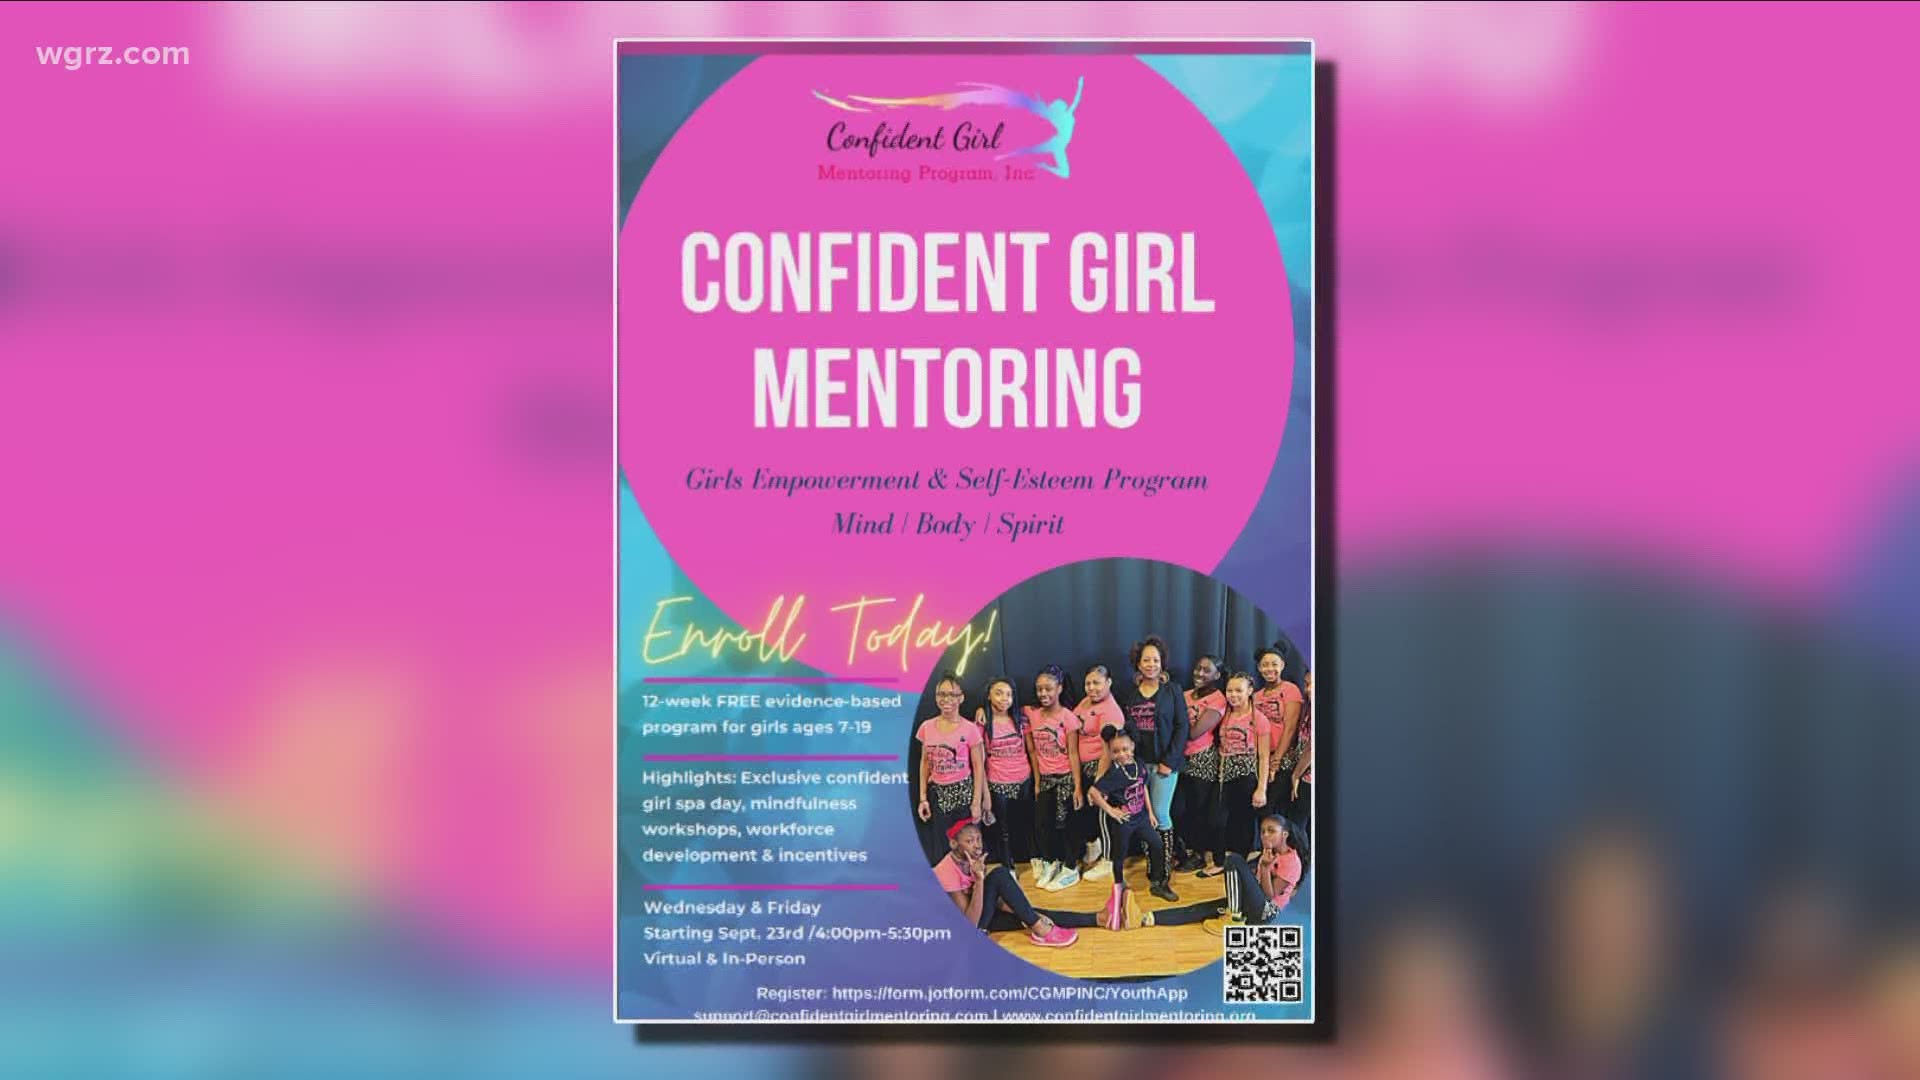 Confident Girl Mentoring kicks off a free 12-week program for girls ages 7-19 on September 23rd.